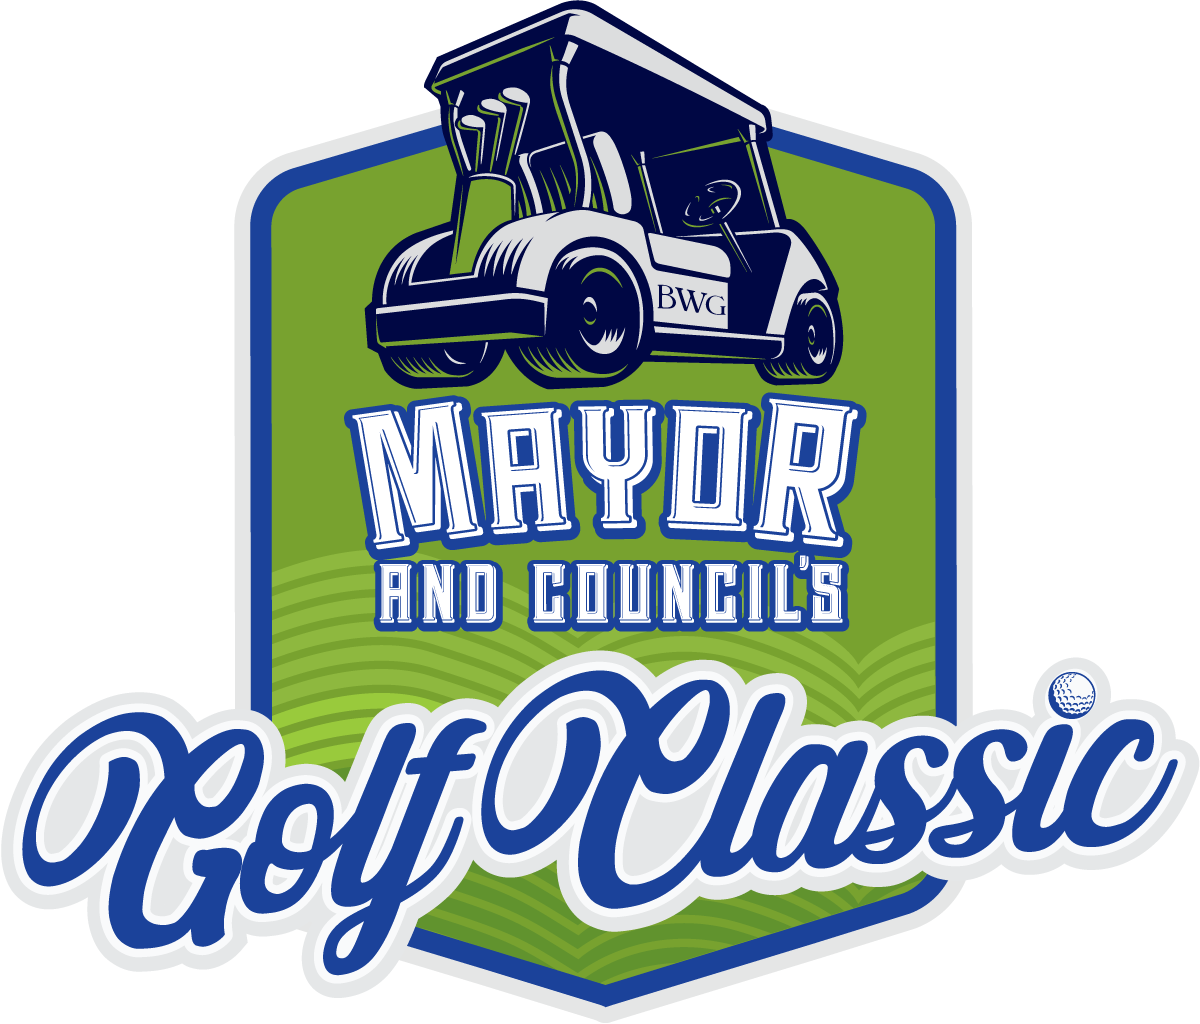 Mayor and Council Golf logo